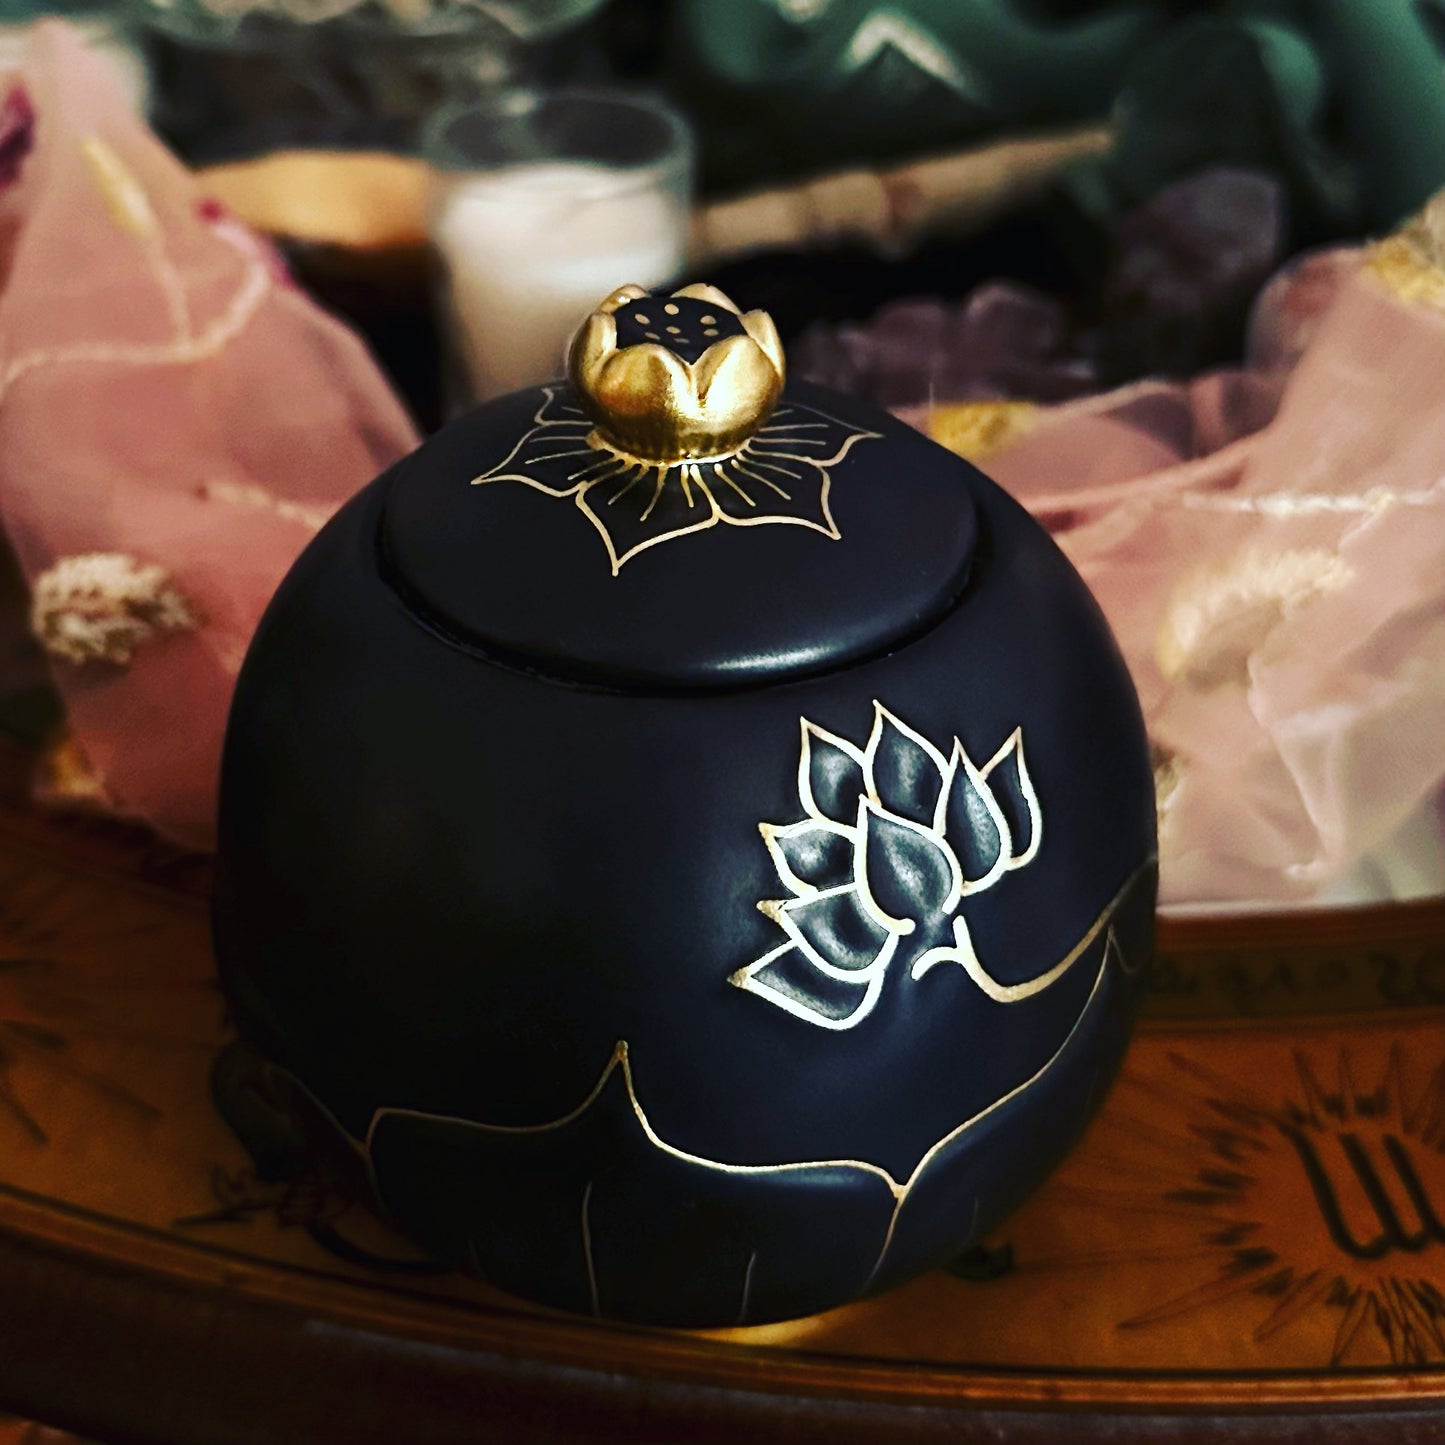 Black Lotus Ceramic Urns, Cremation Funeral, Keepsake Memorial